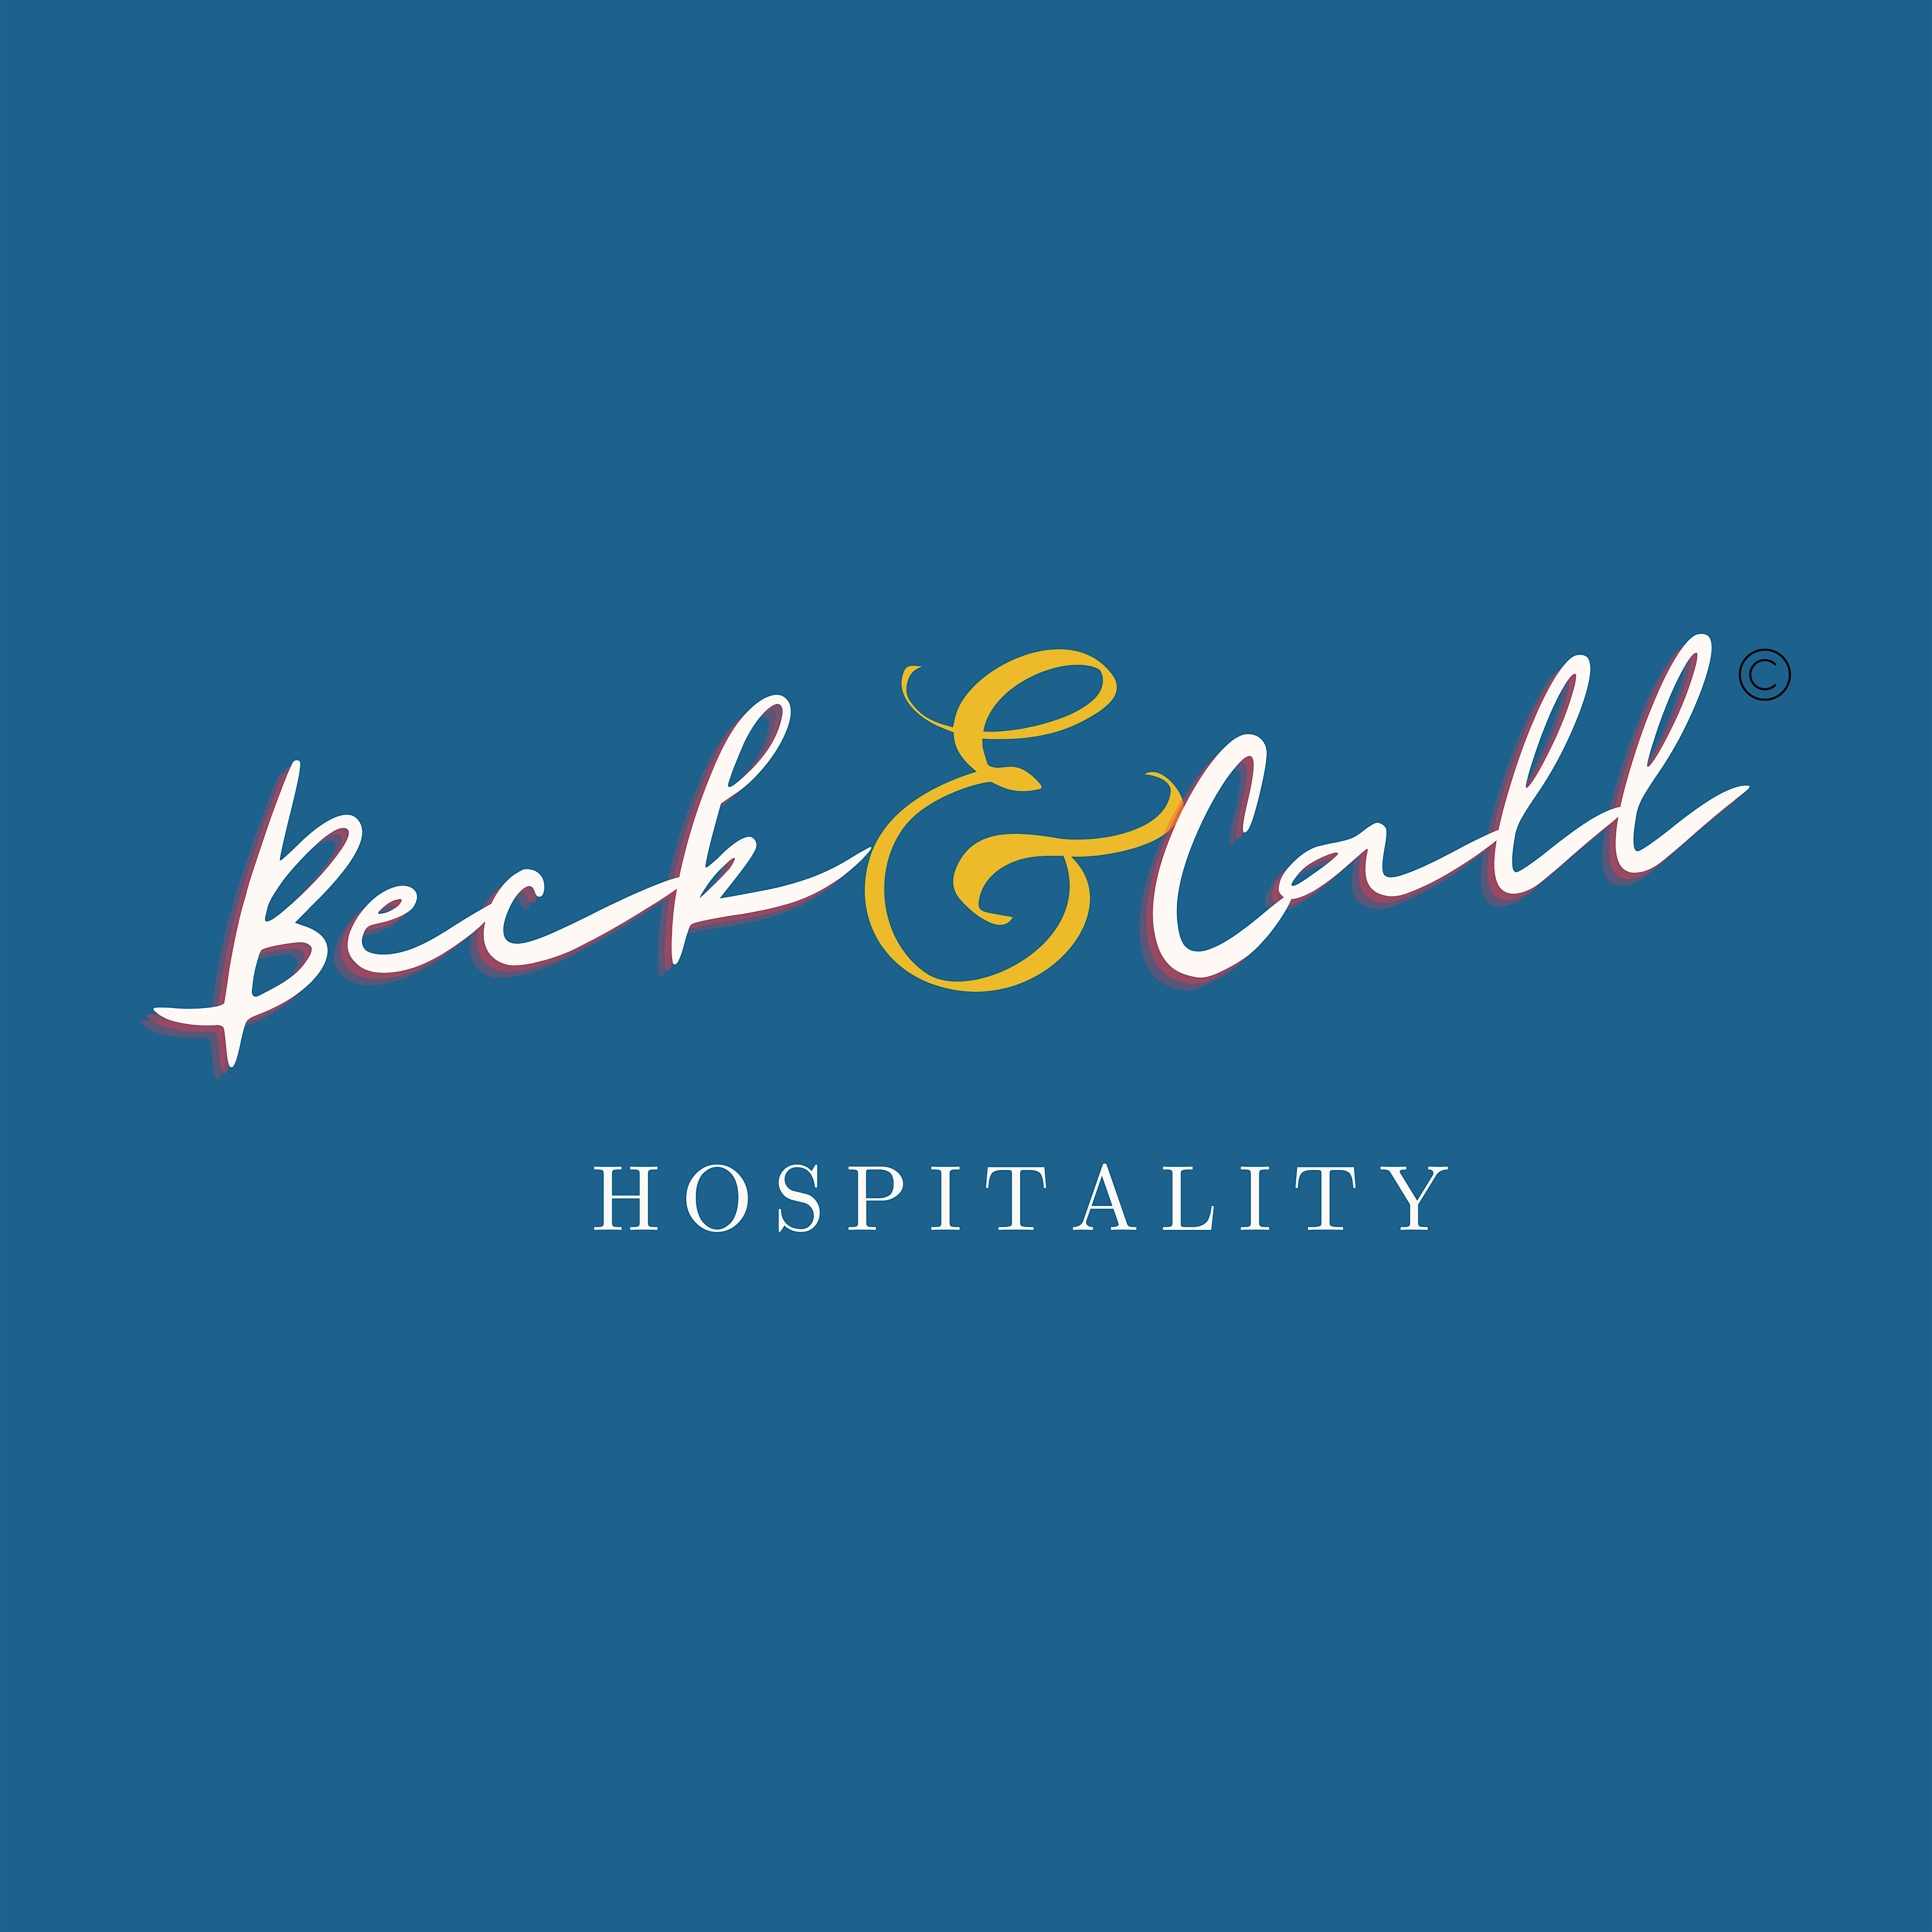 Beck&Call Hospitality